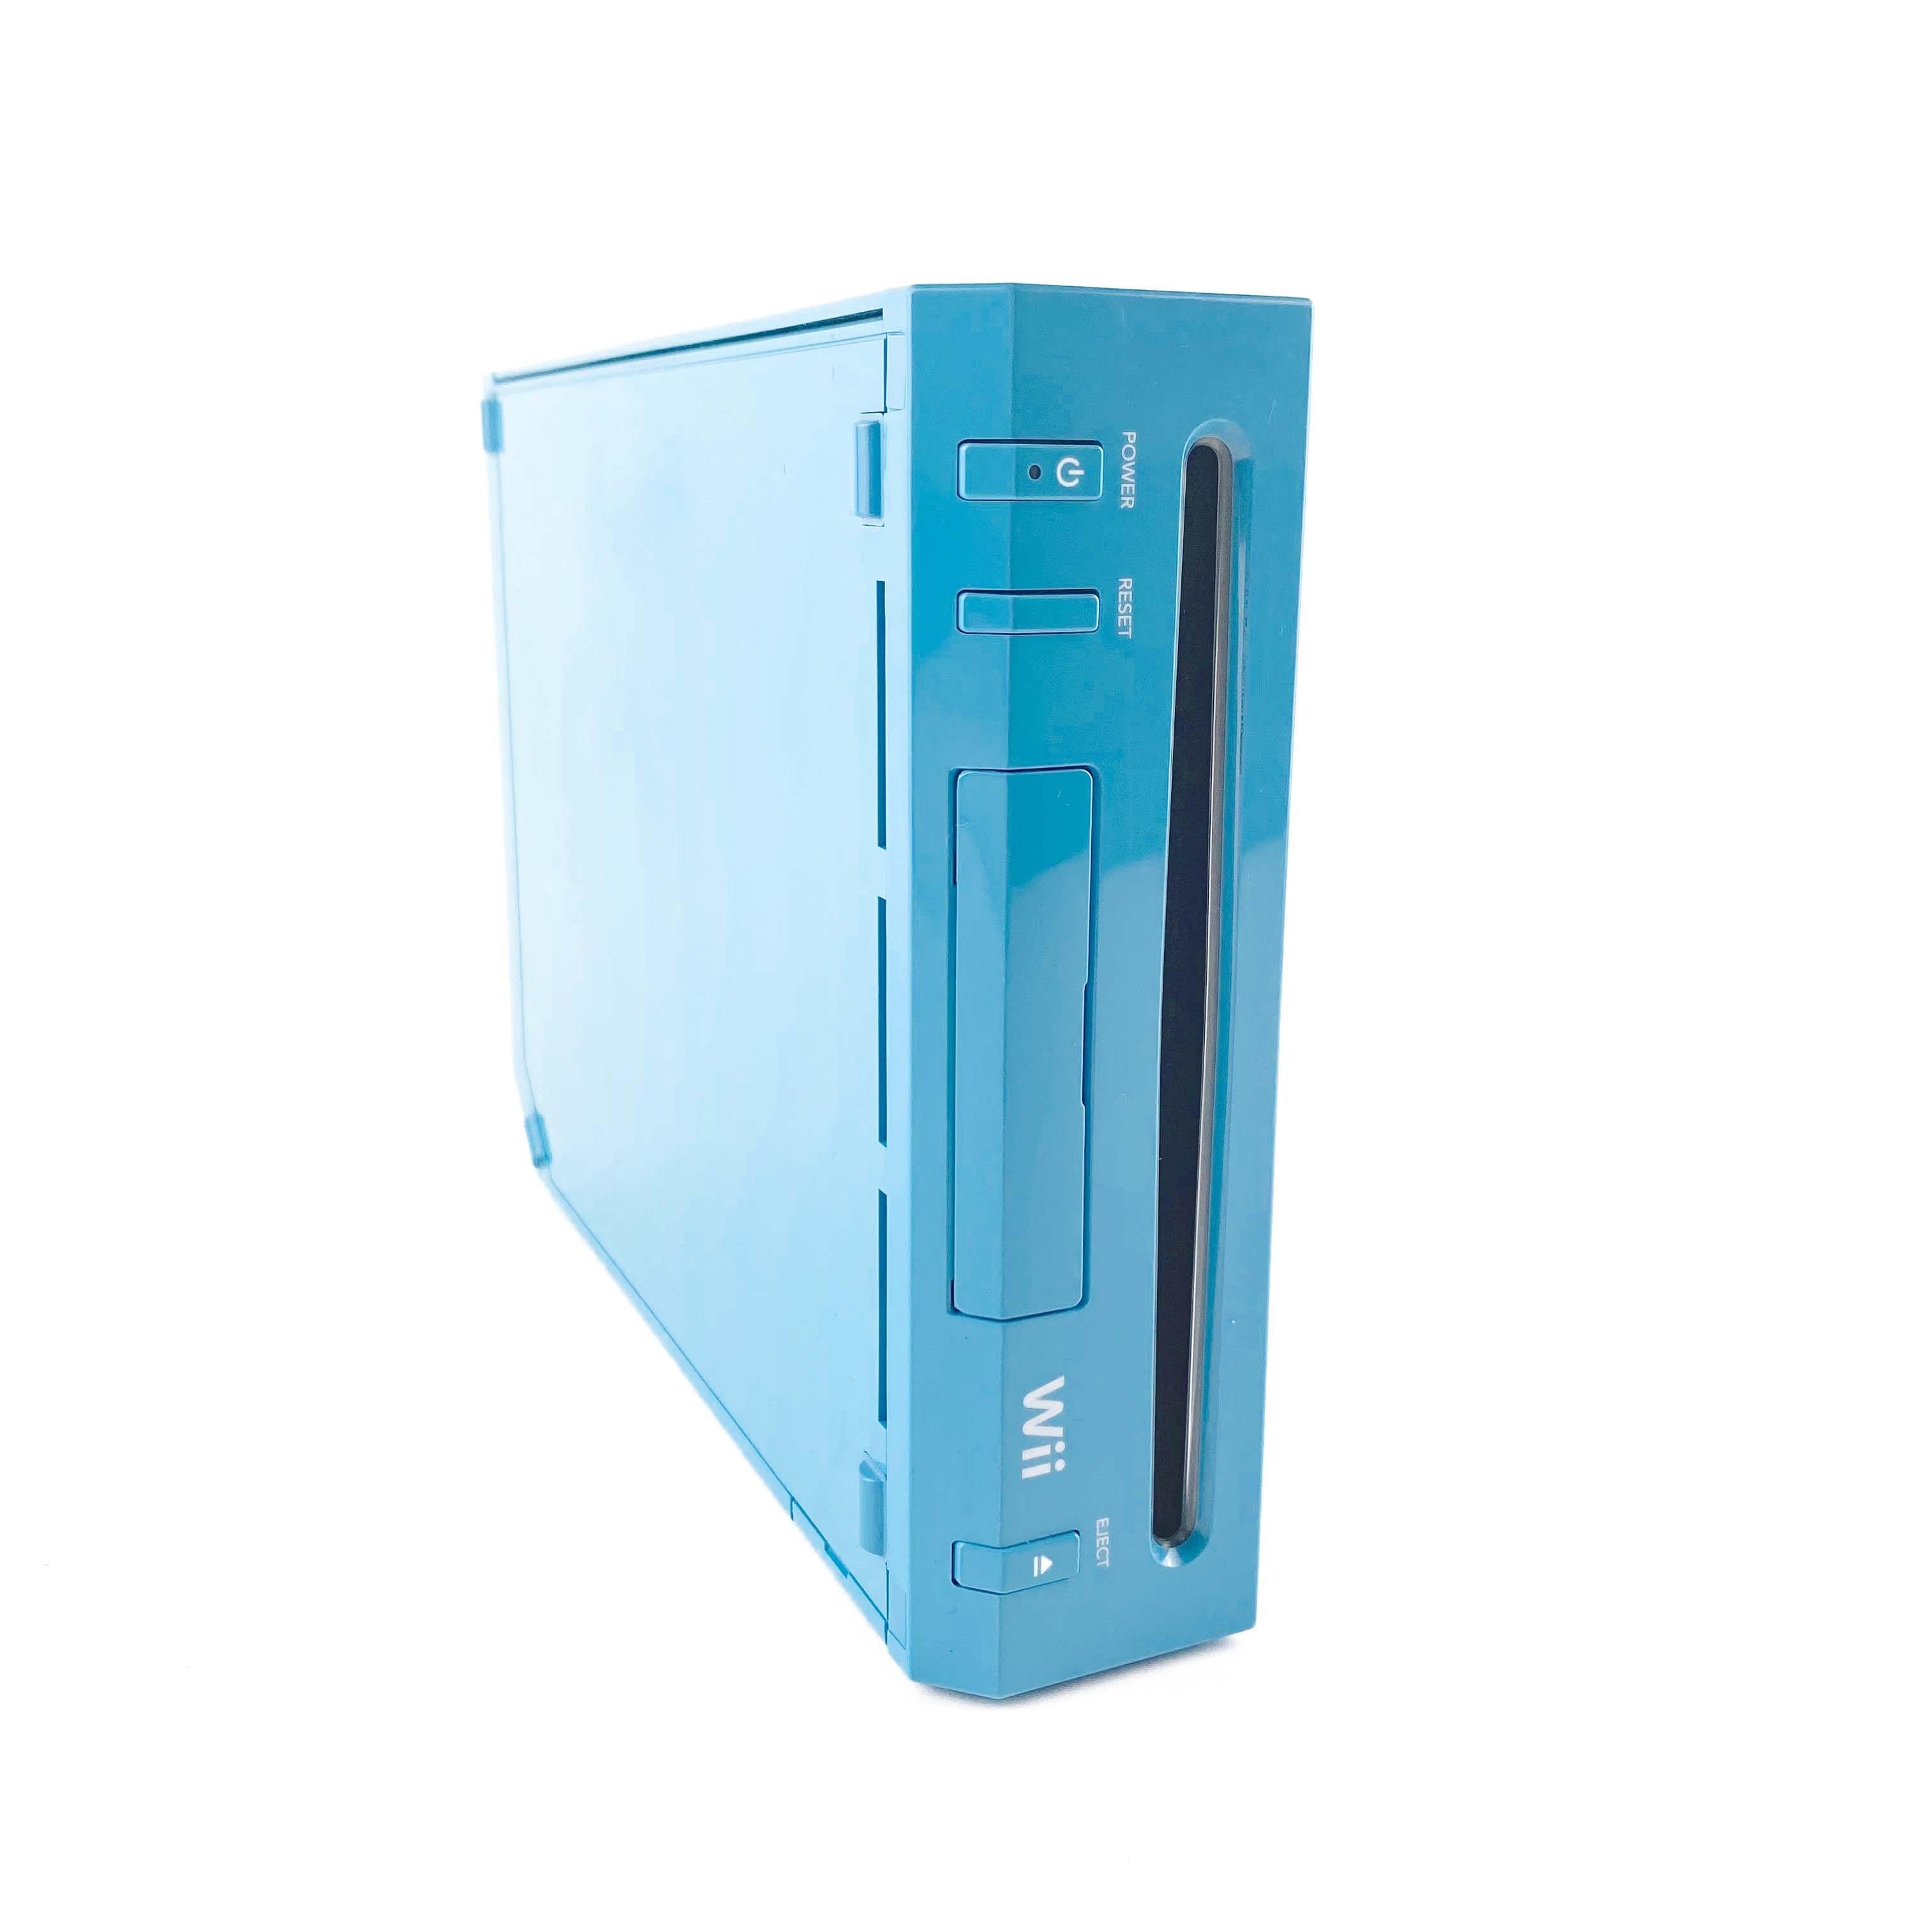 Nintendo Wii Blue Teal Console Bundle (RVL-101)